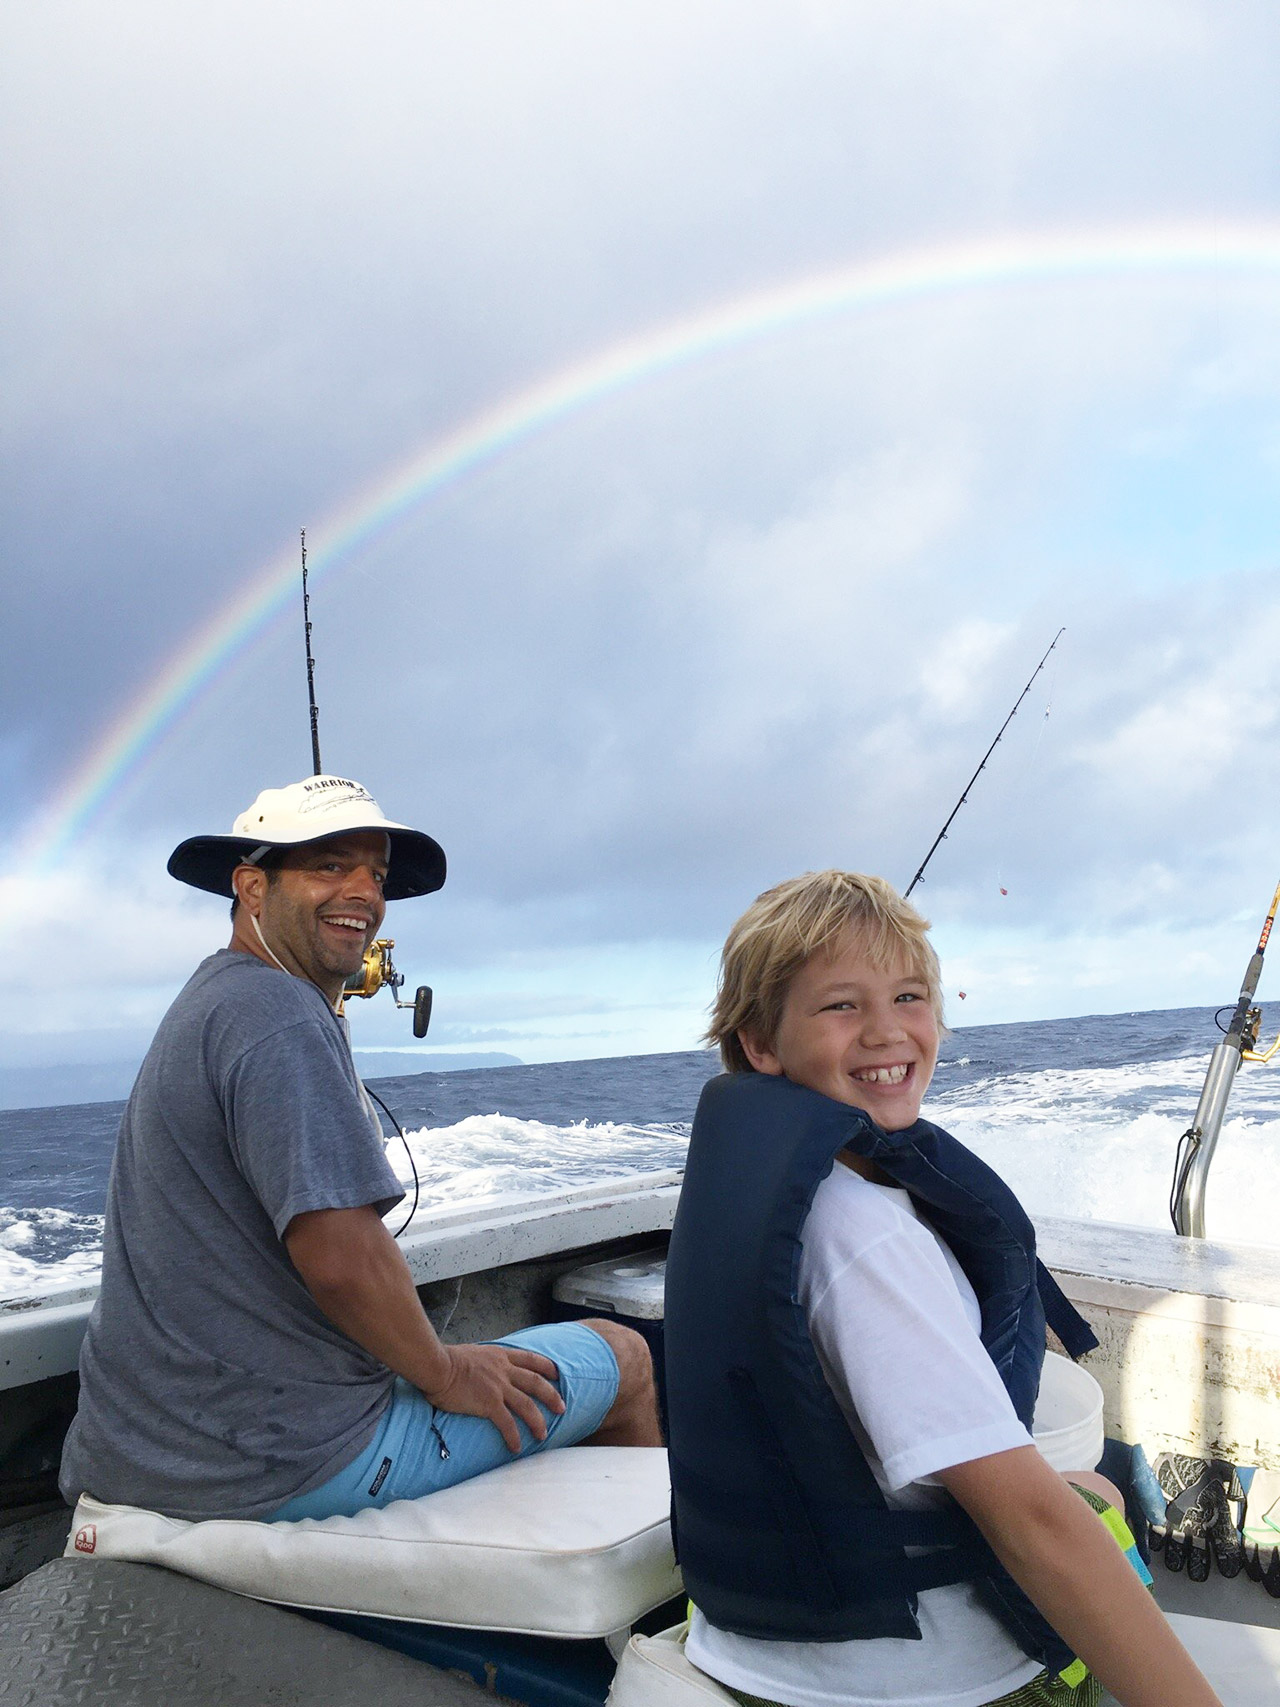 Great family fishing trip